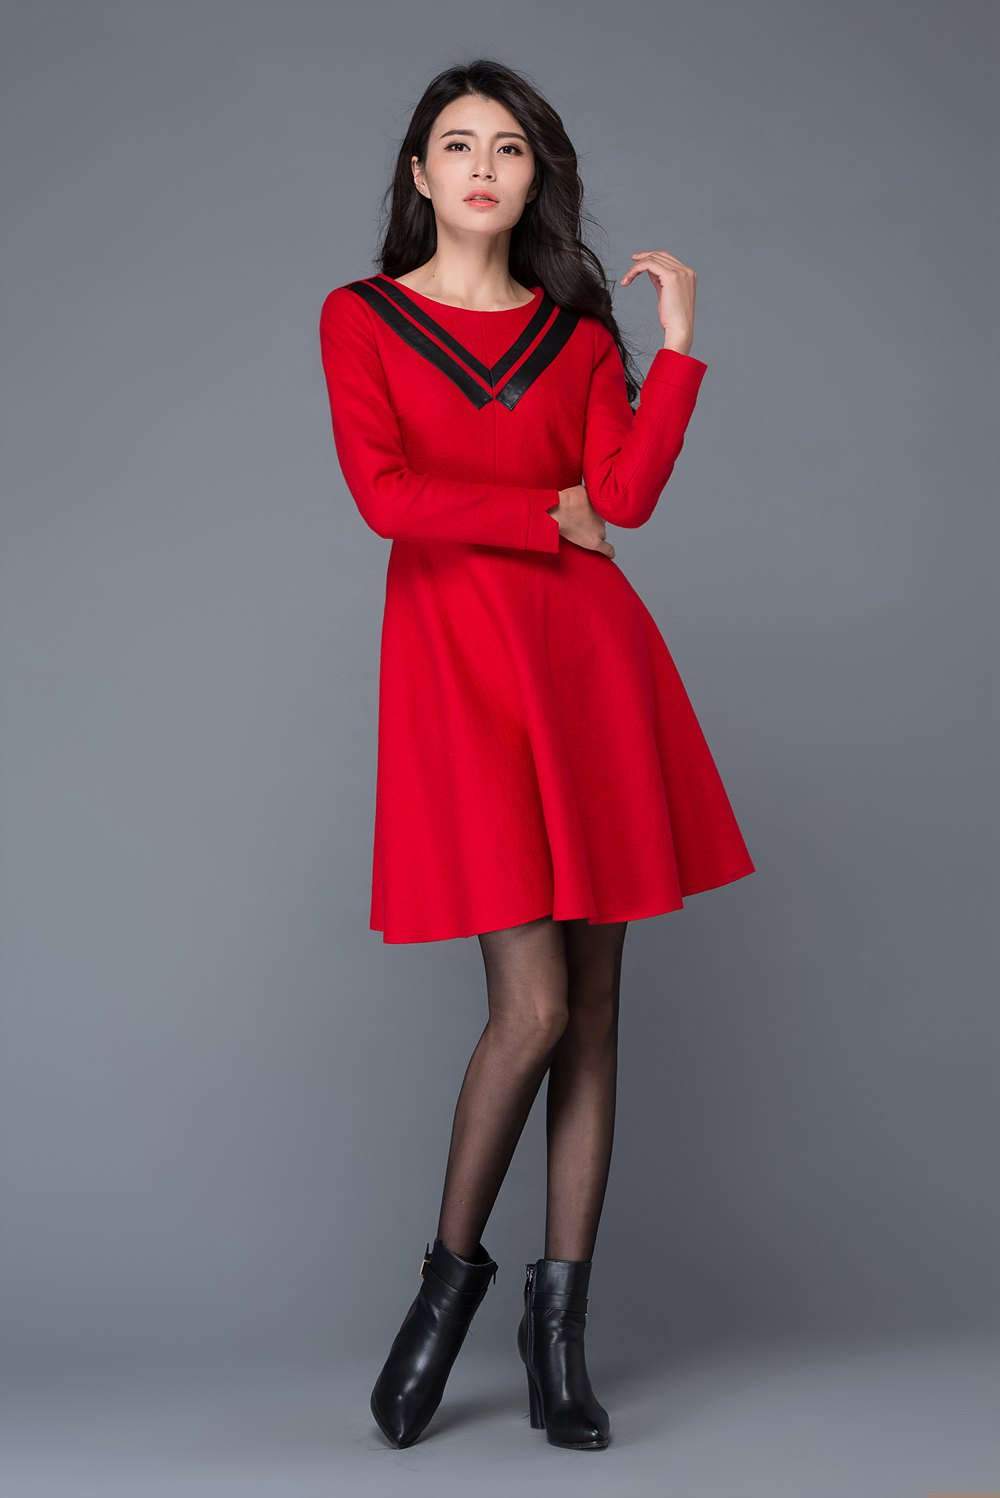 Red wool dress, Womens dresses for winter, girls dresses, winter dress, mini dress, warm winter dress, black PU collar dress C1030